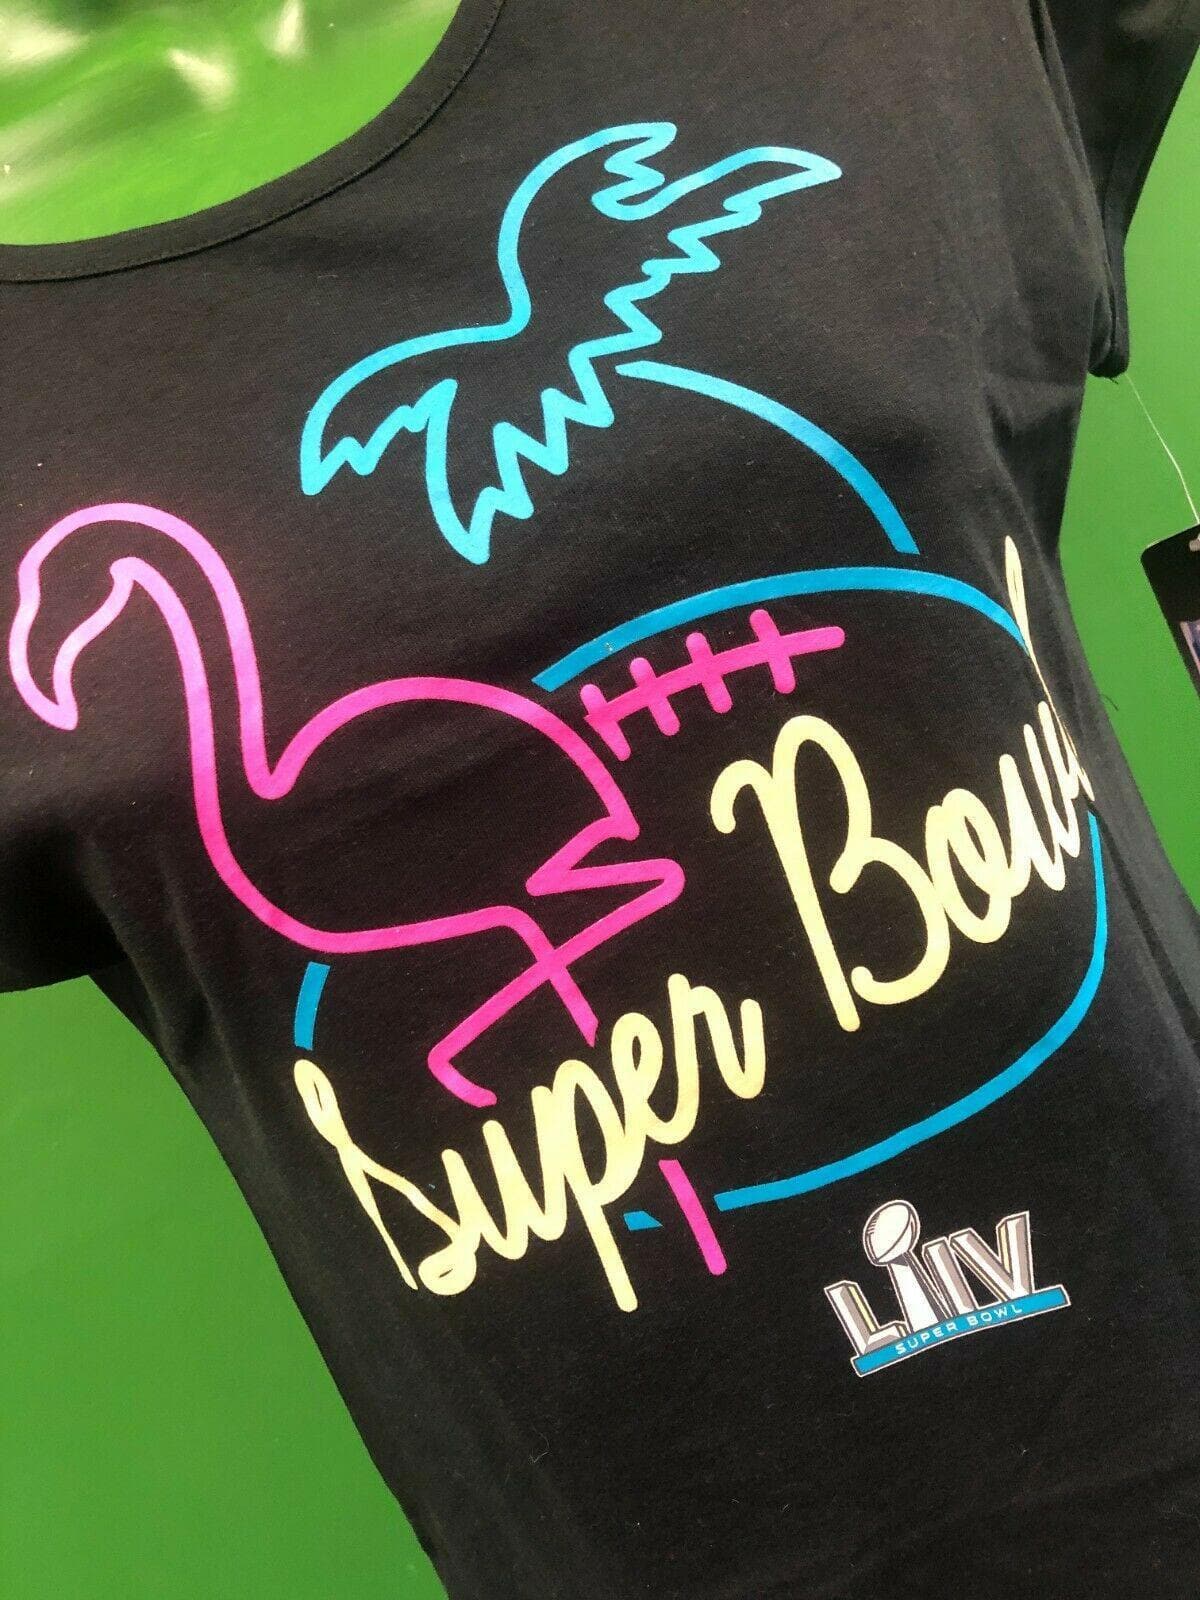 NFL Super Bowl LIV (54) Miami Black T-Shirt Girls' Medium 10-12 NWT